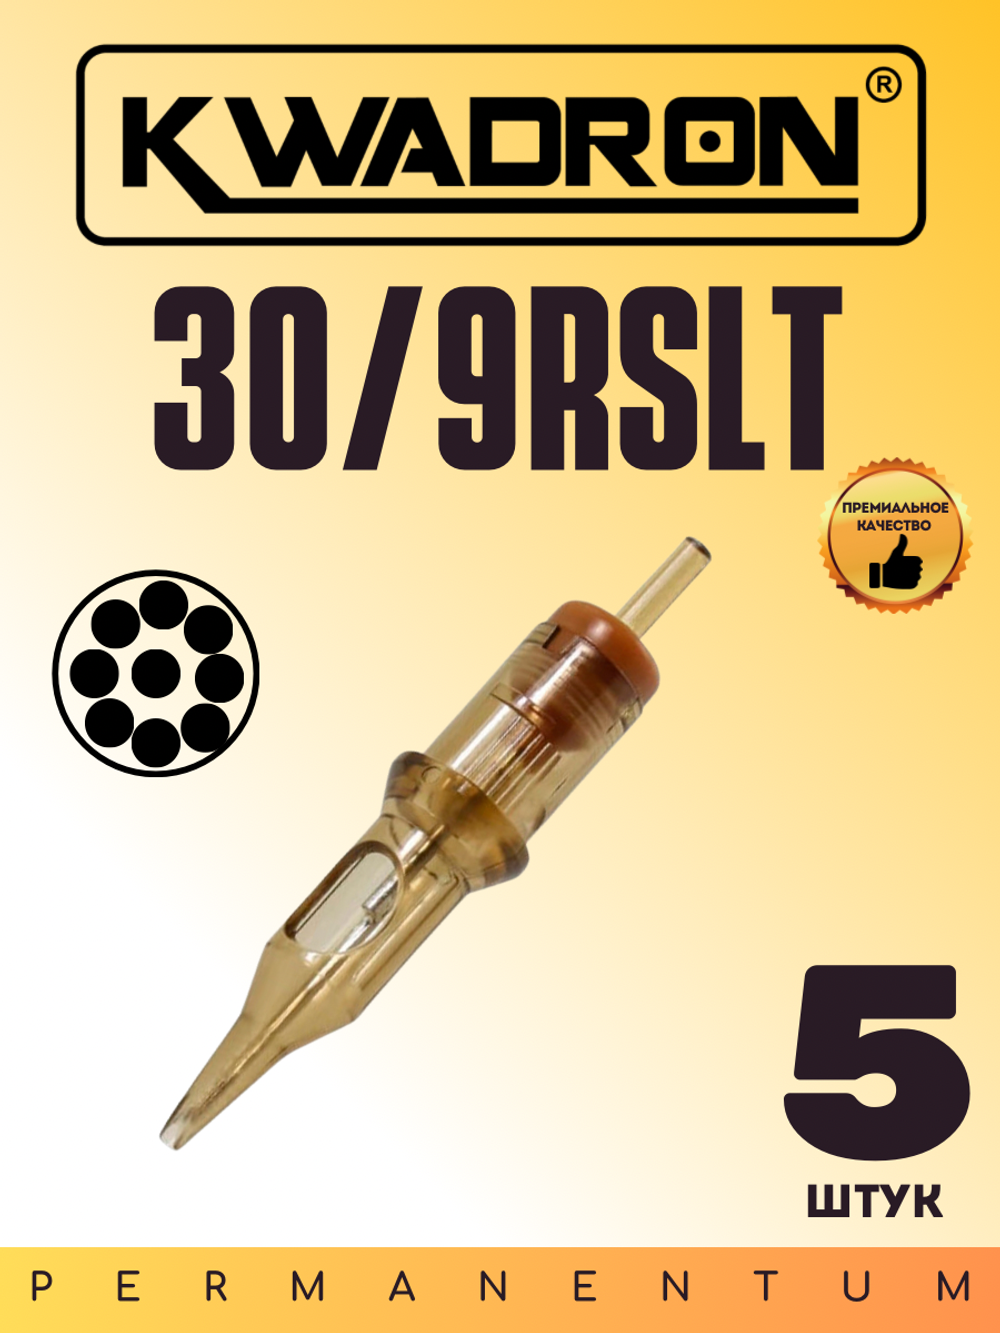 Картридж для татуажа "KWADRON Round Liner 30/9RSLT" блистер 5 шт.